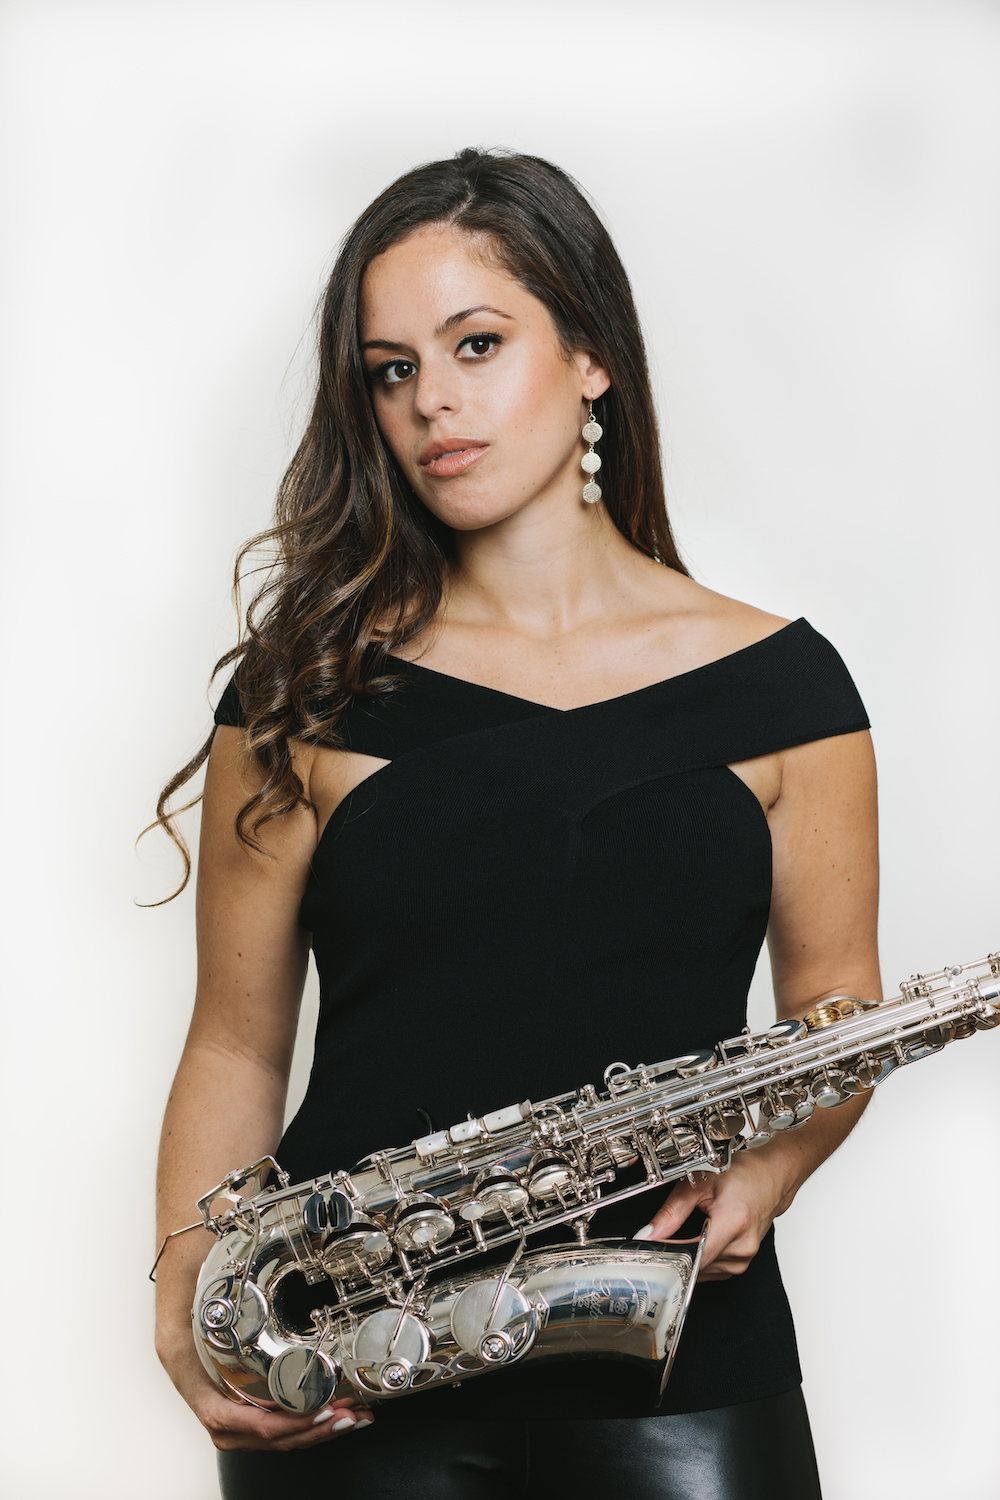 Alexa tarantino looking serious with alto saxophone